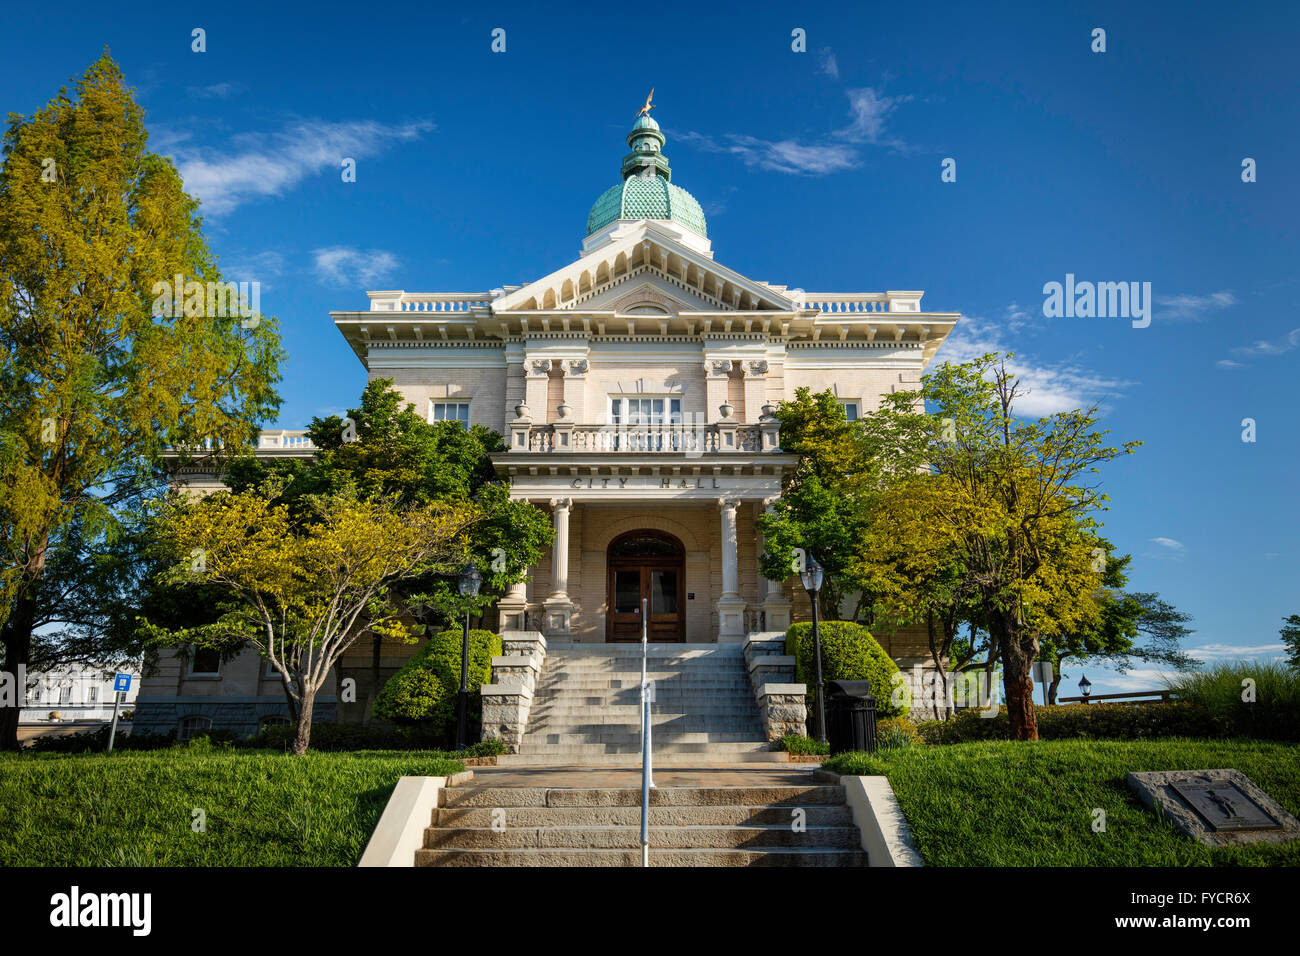 Municipio, Atene, GEORGIA, STATI UNITI D'AMERICA Foto Stock